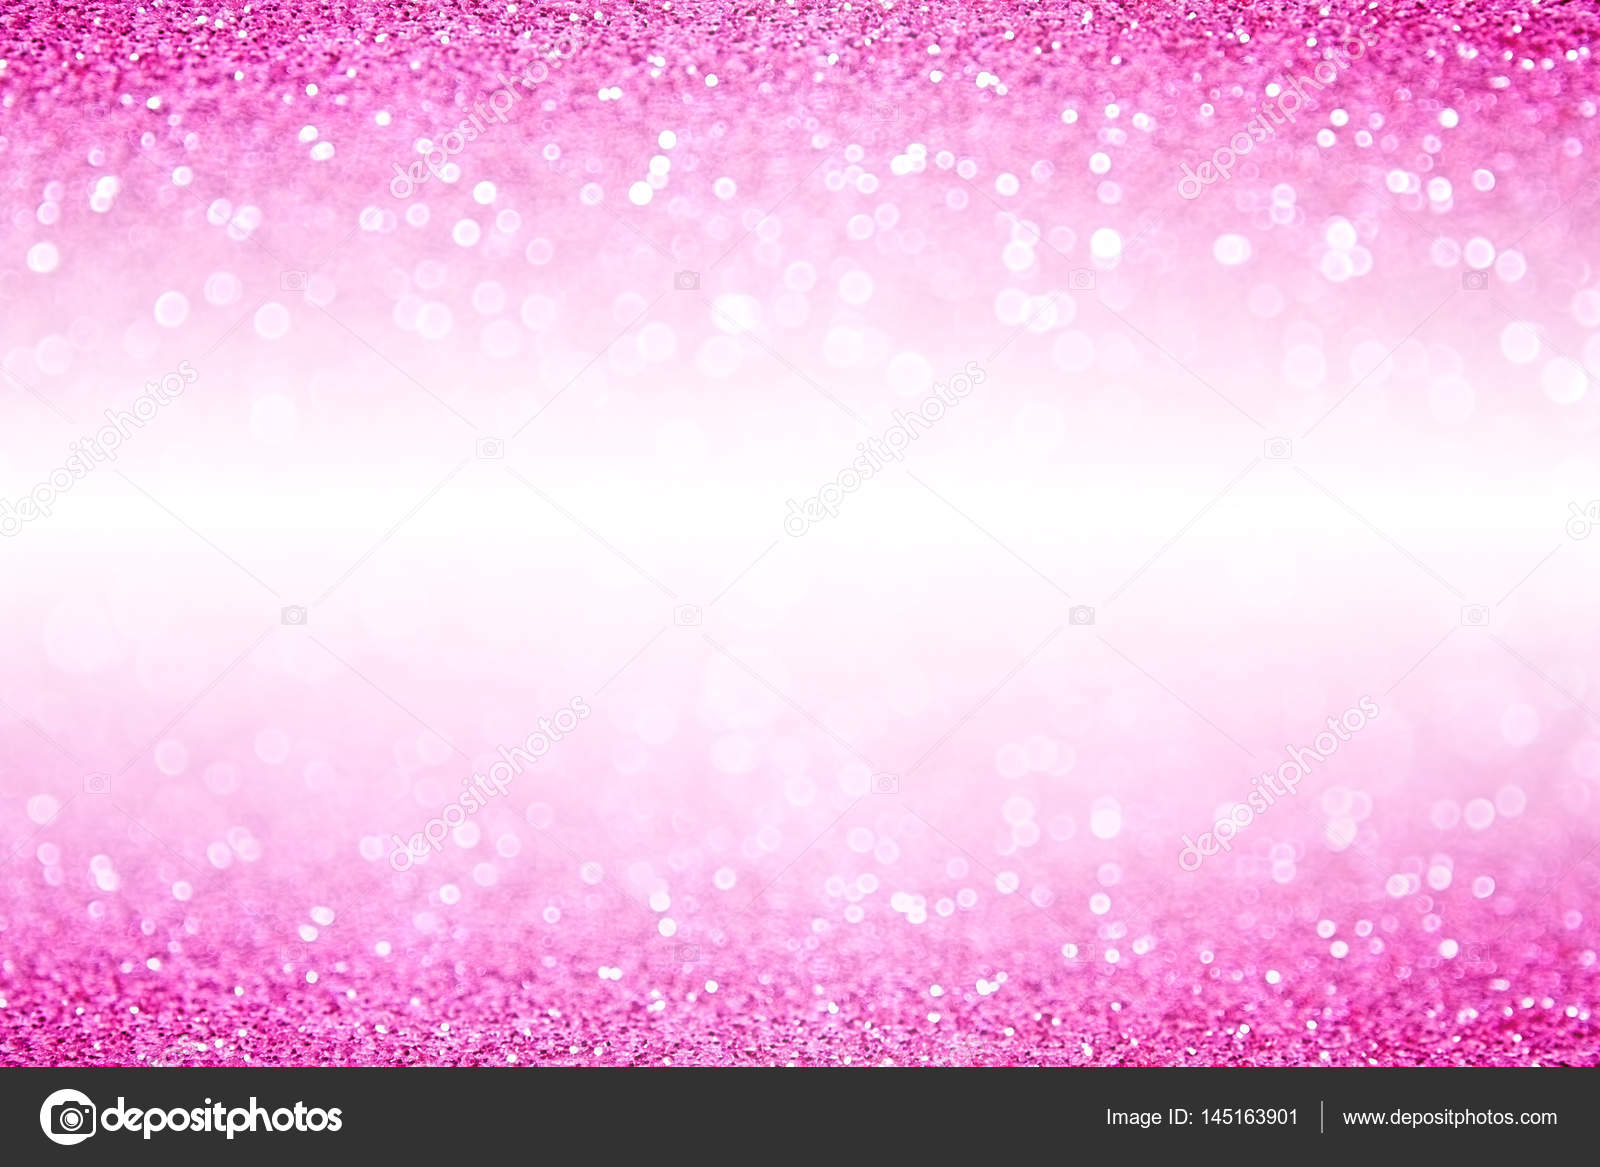 Pink Glitter Backdrop, Pink Sparkle Backdrop